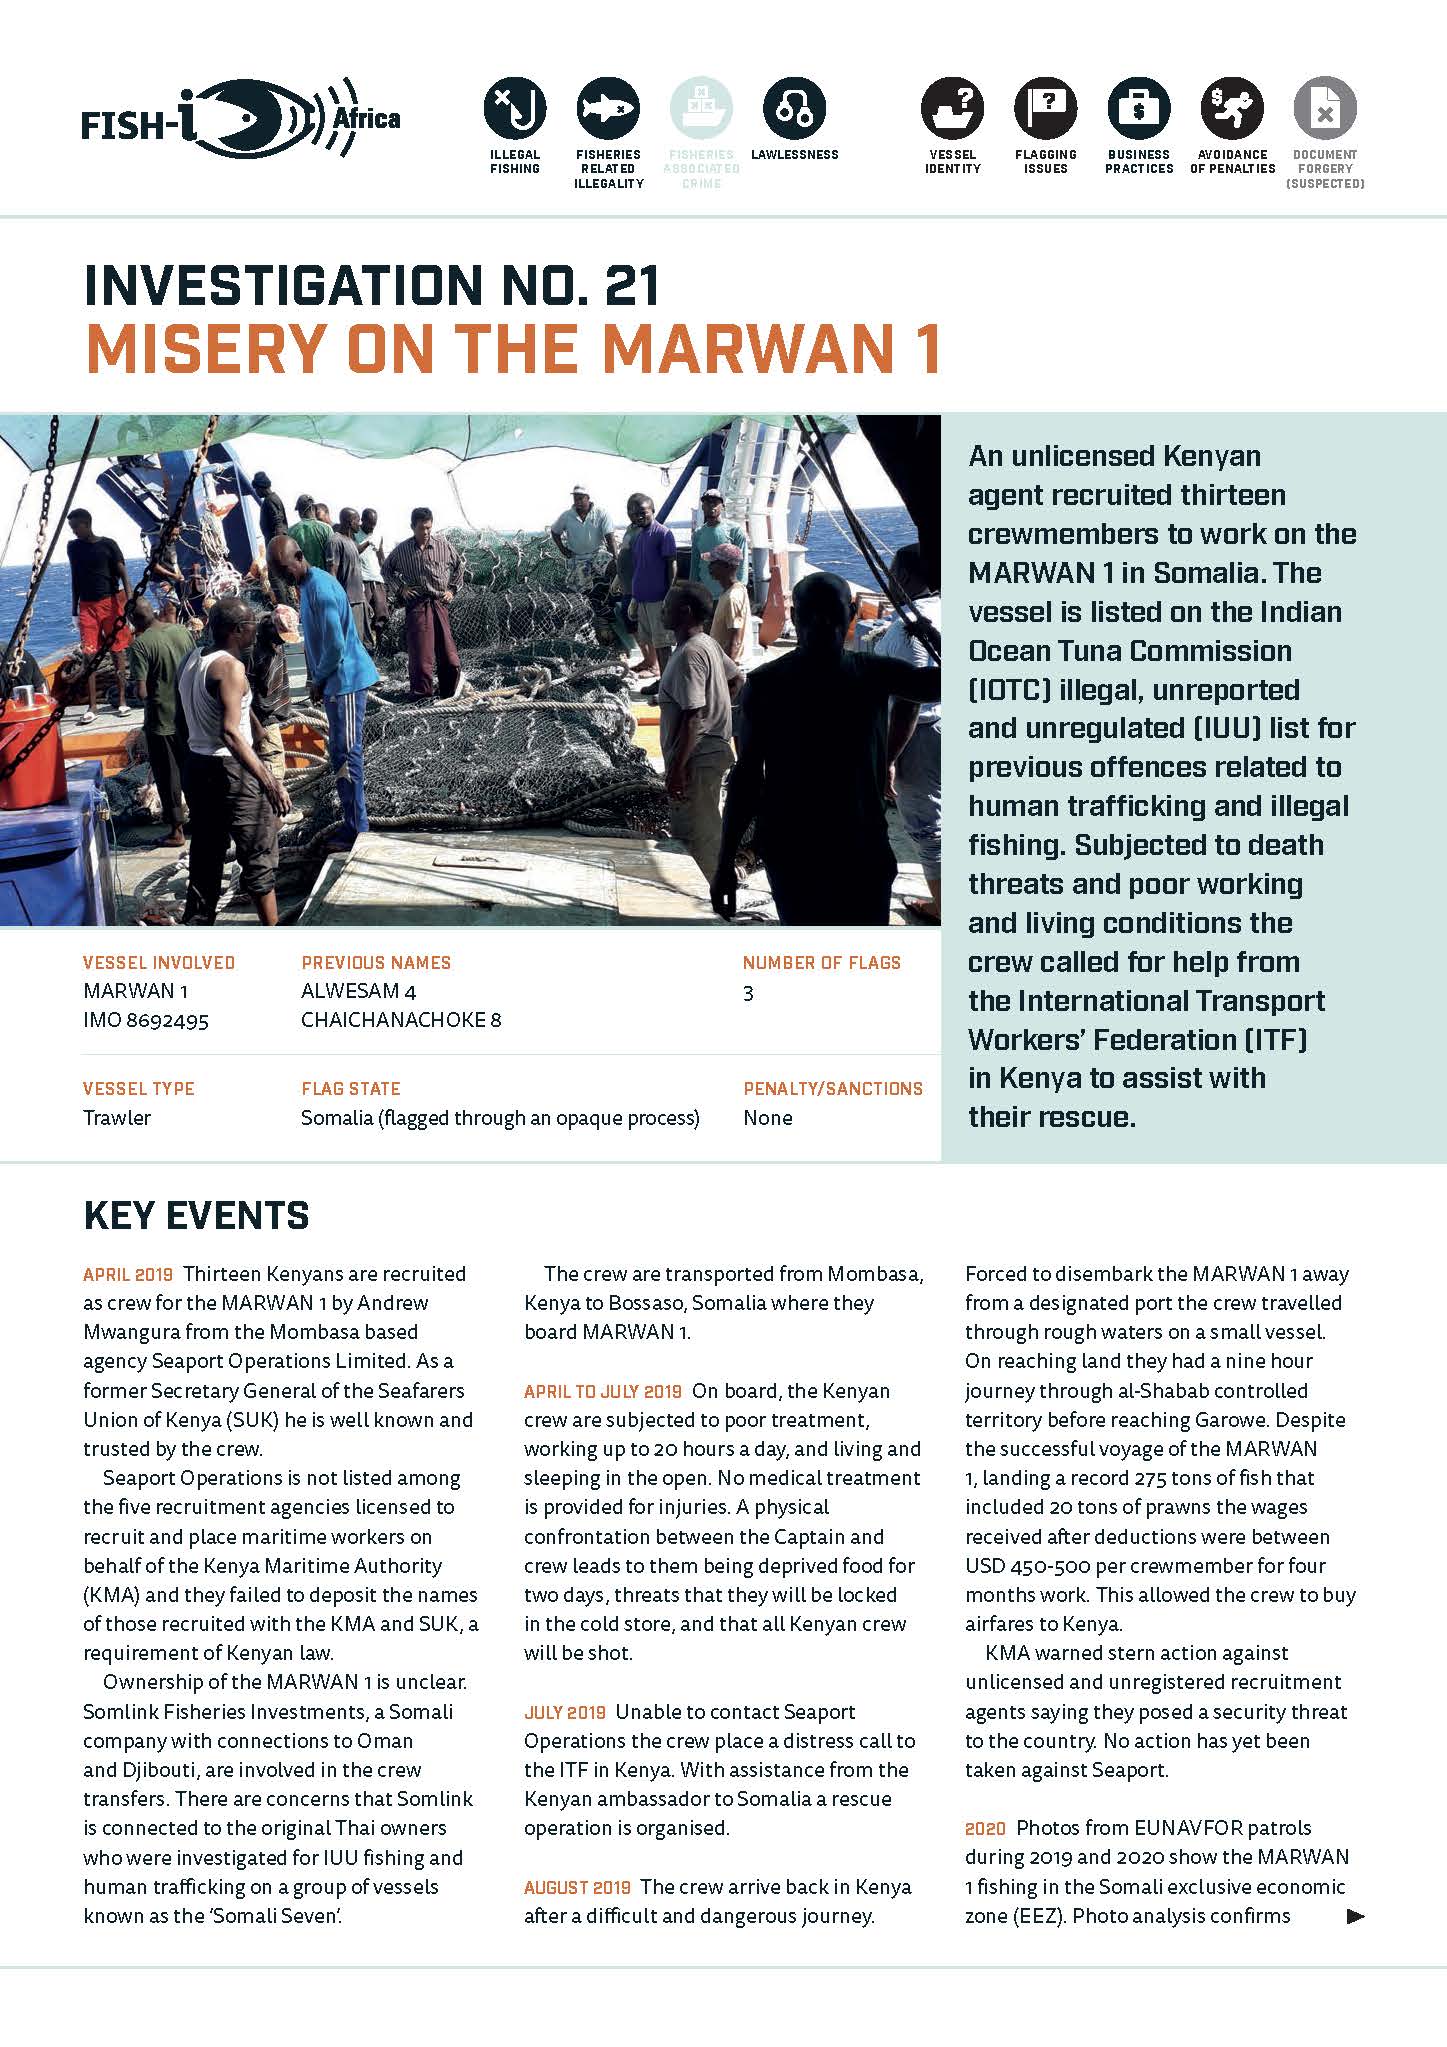 Misery on the MARWAN 1